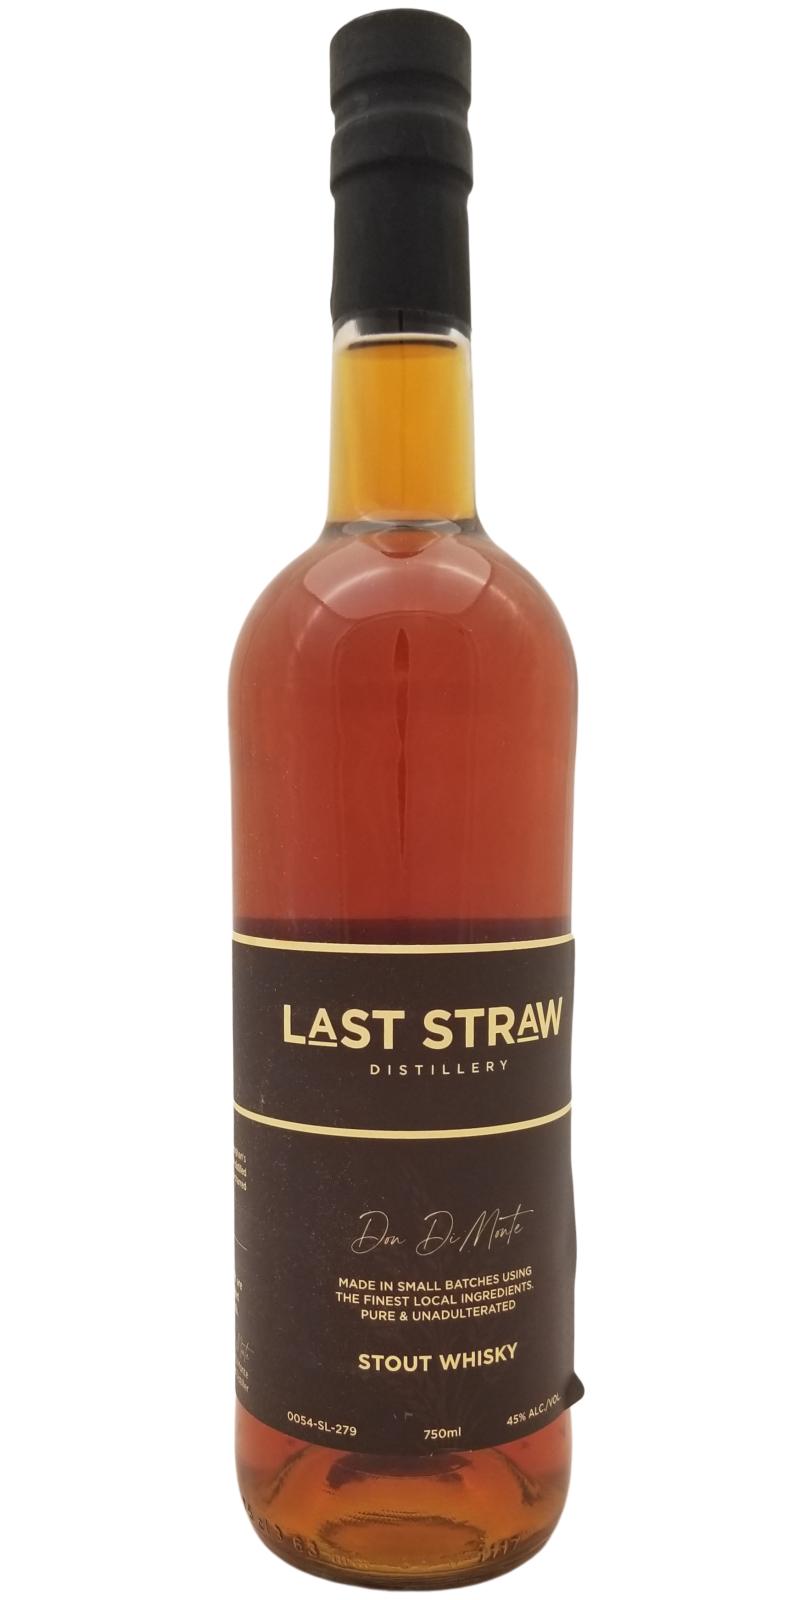 Last Straw Distillery Stout Whisky 45% 750ml